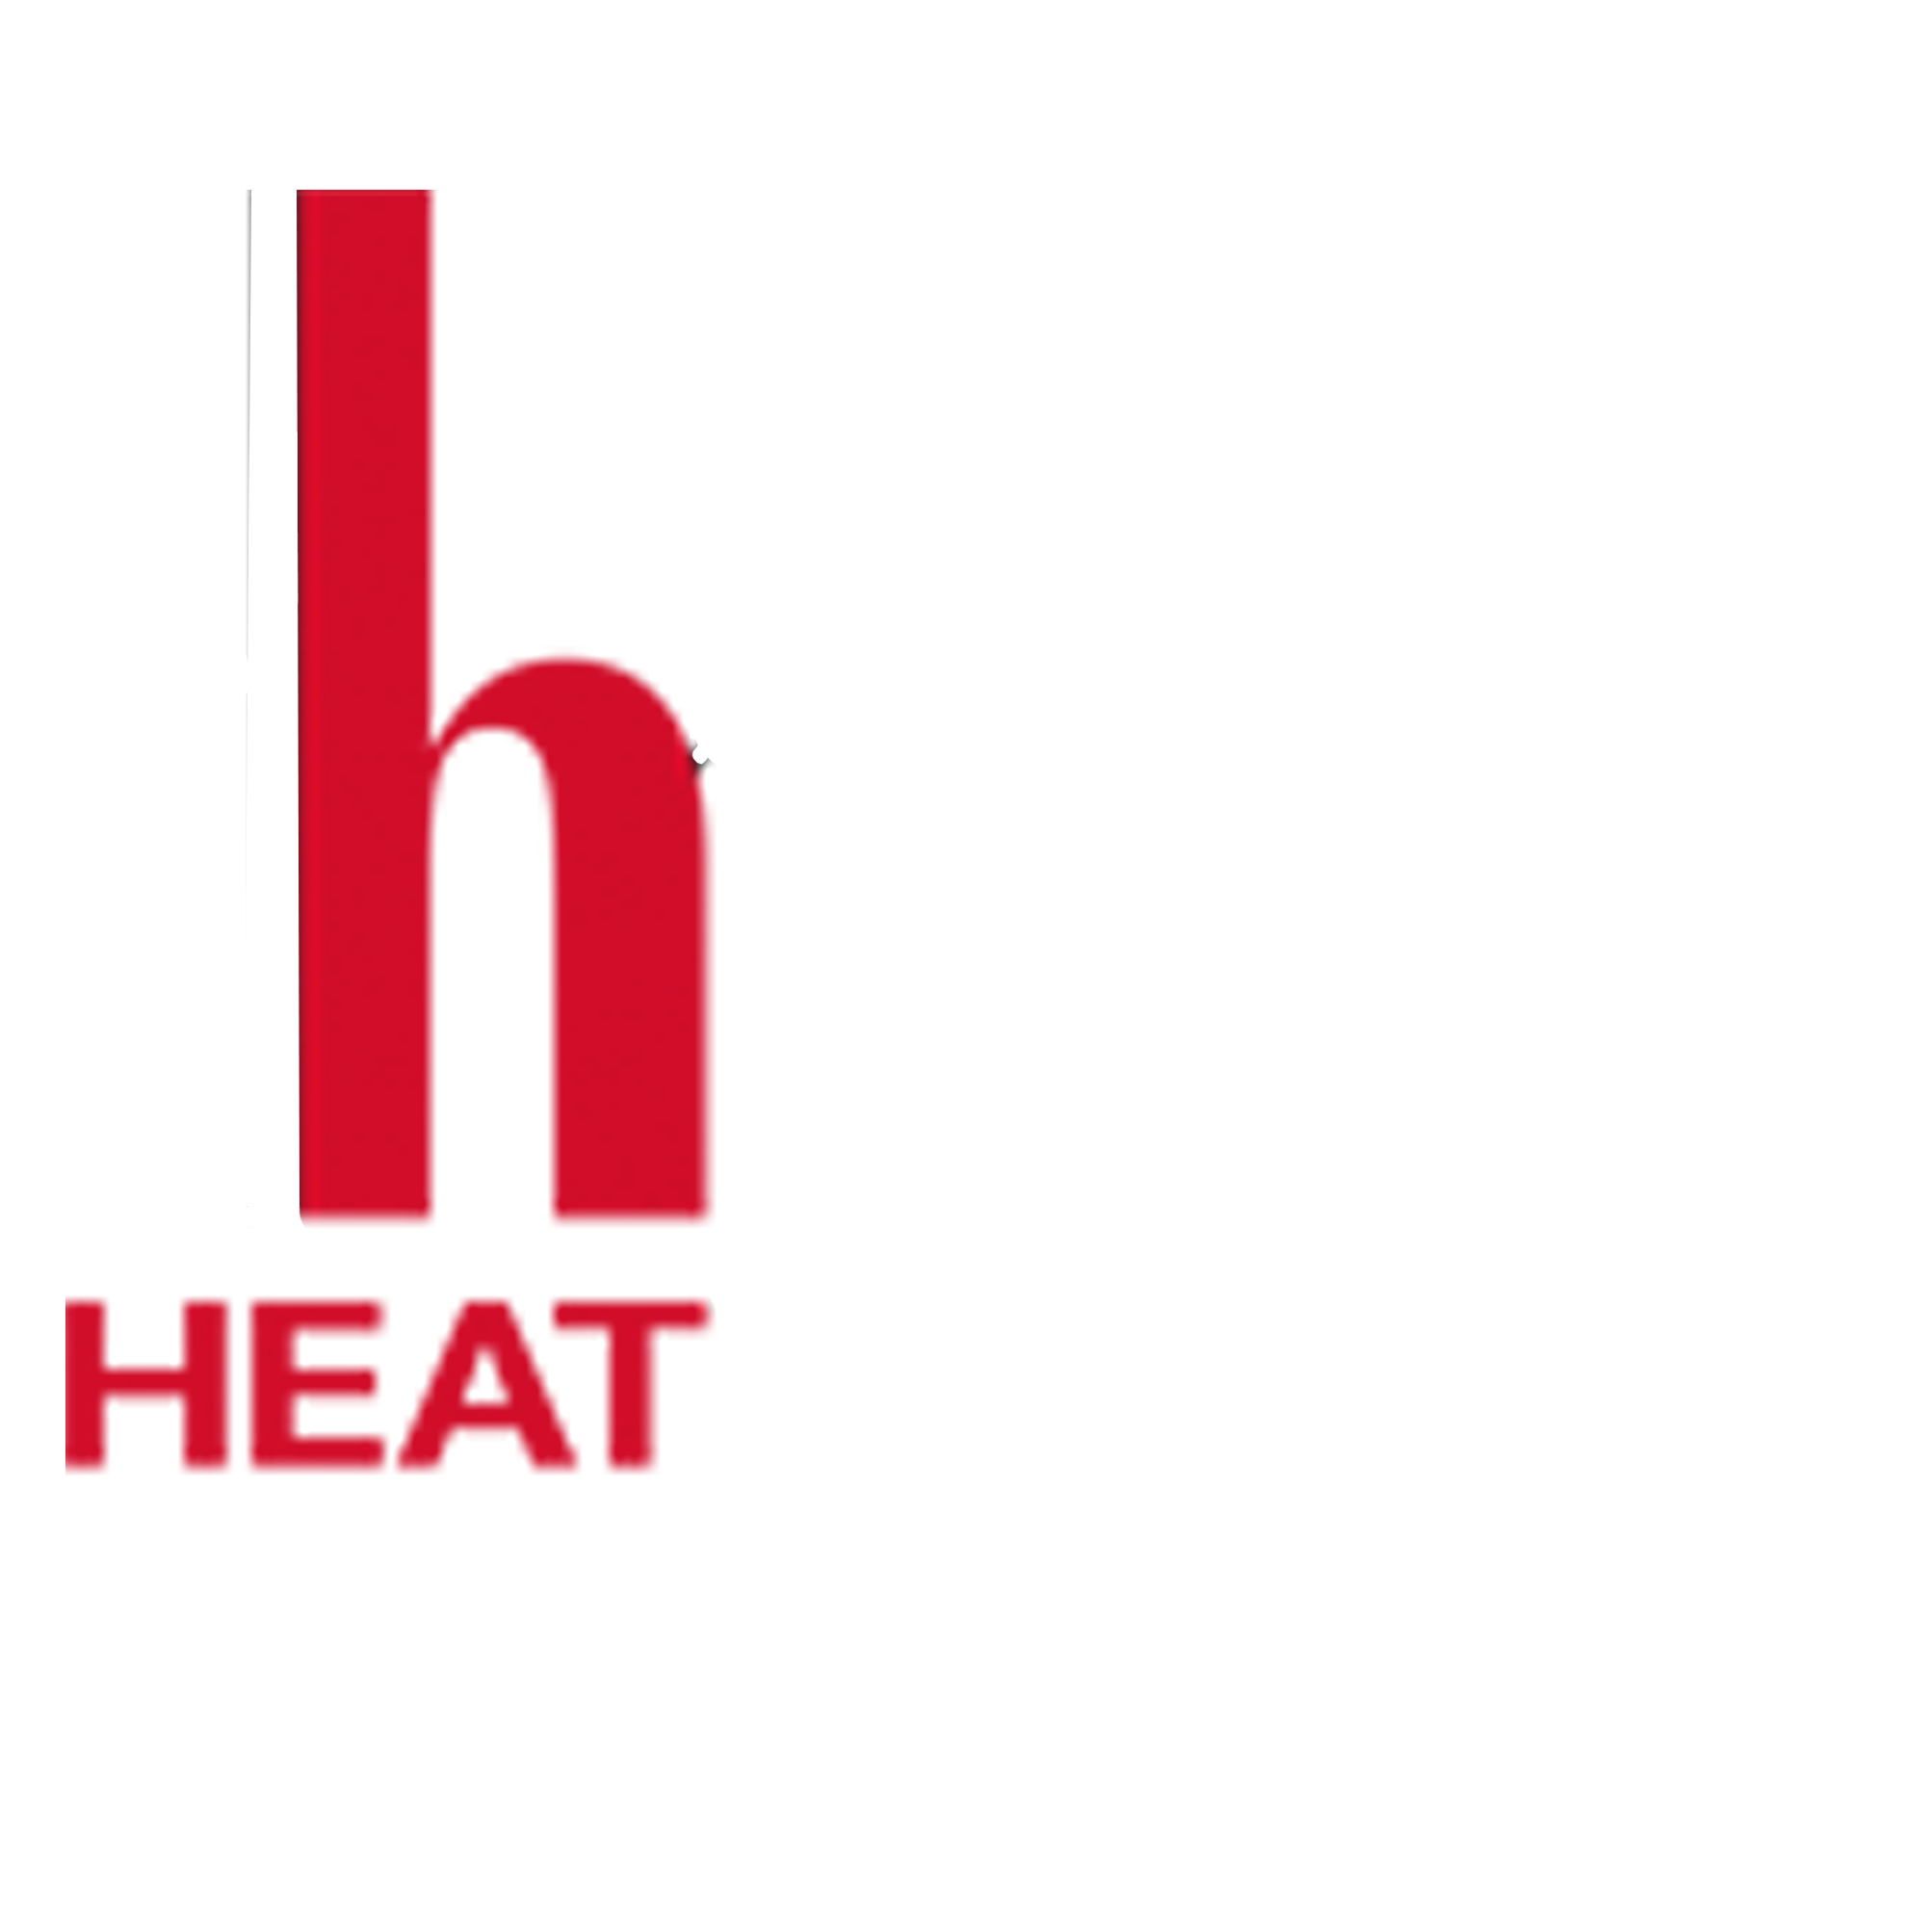 Heat Master